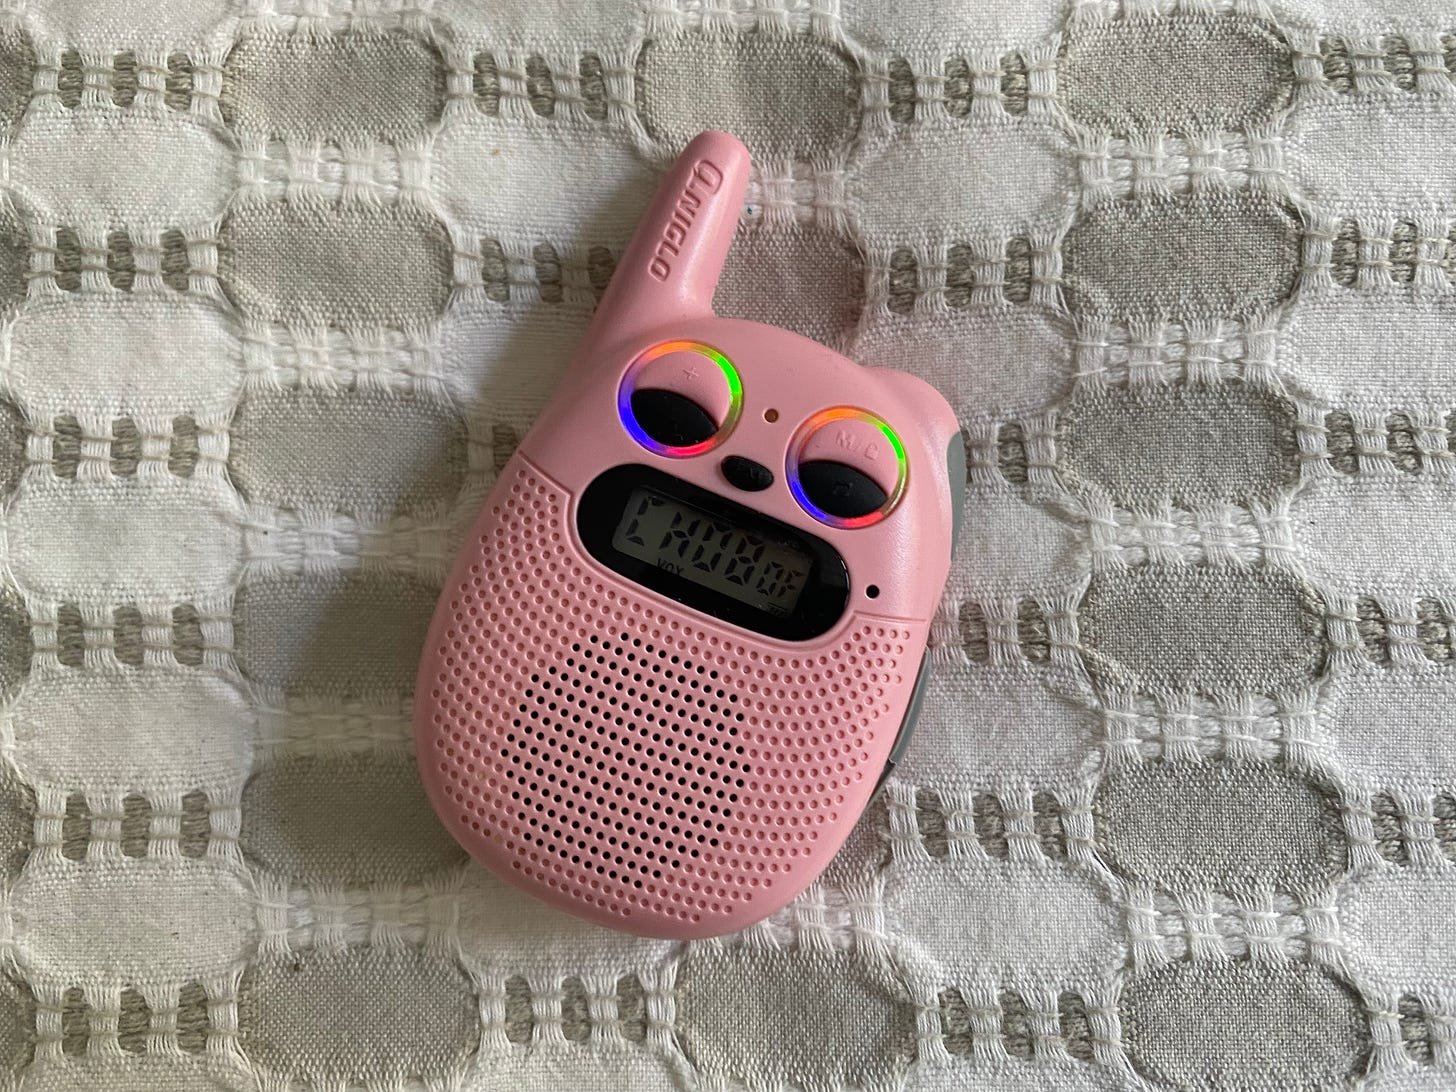 A pink walkie talkie, shaped like a cat.